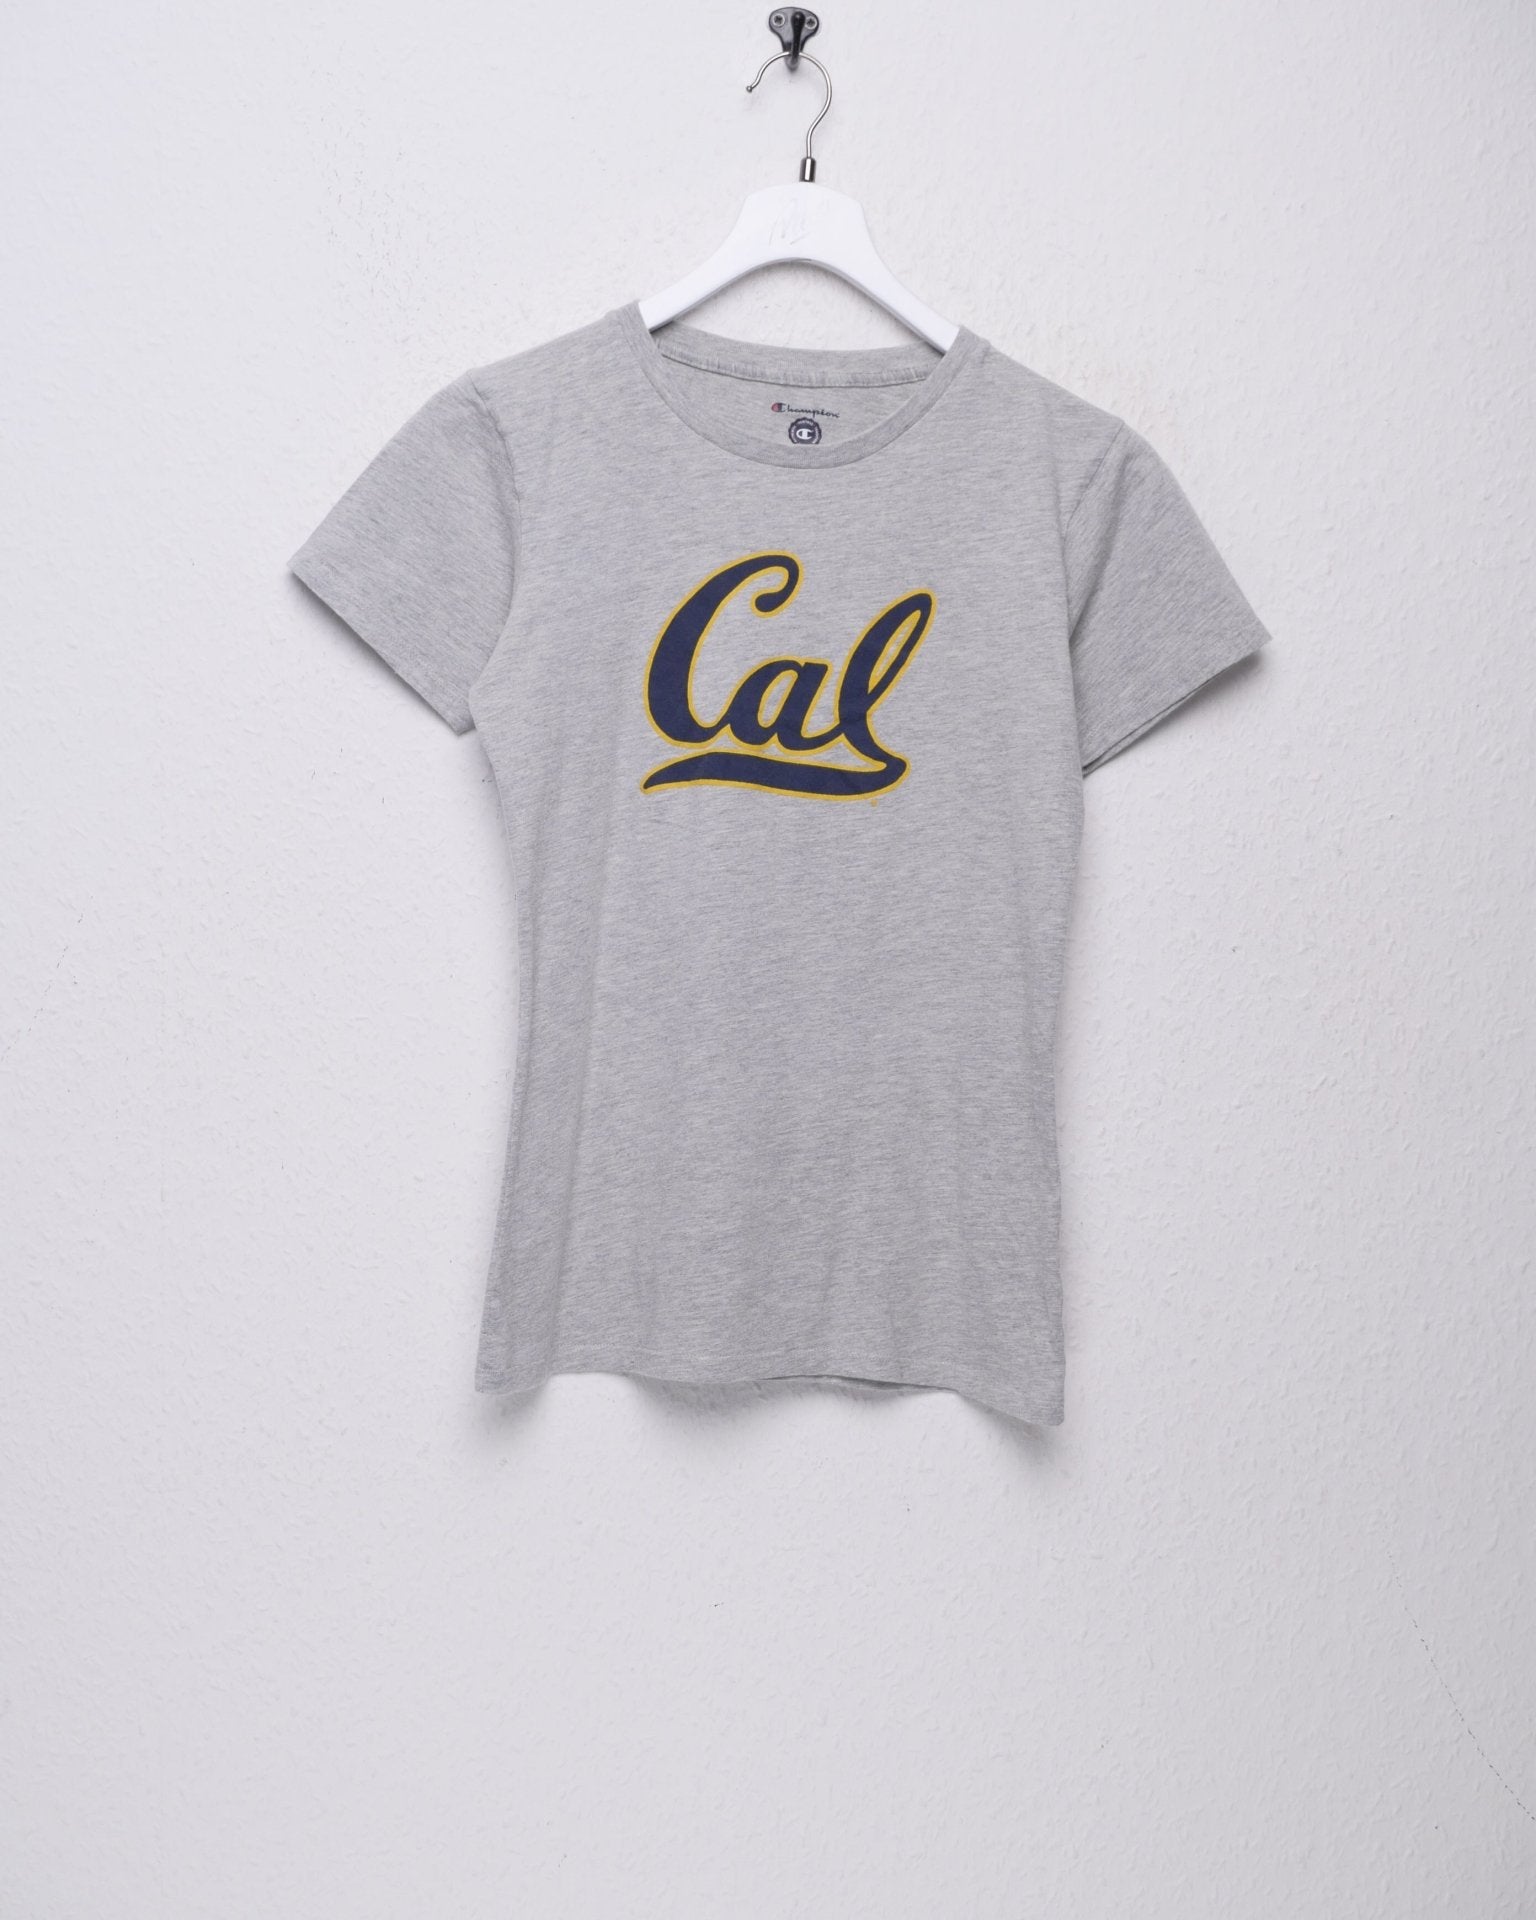 Champion Cal printed Logo Shirt - Peeces